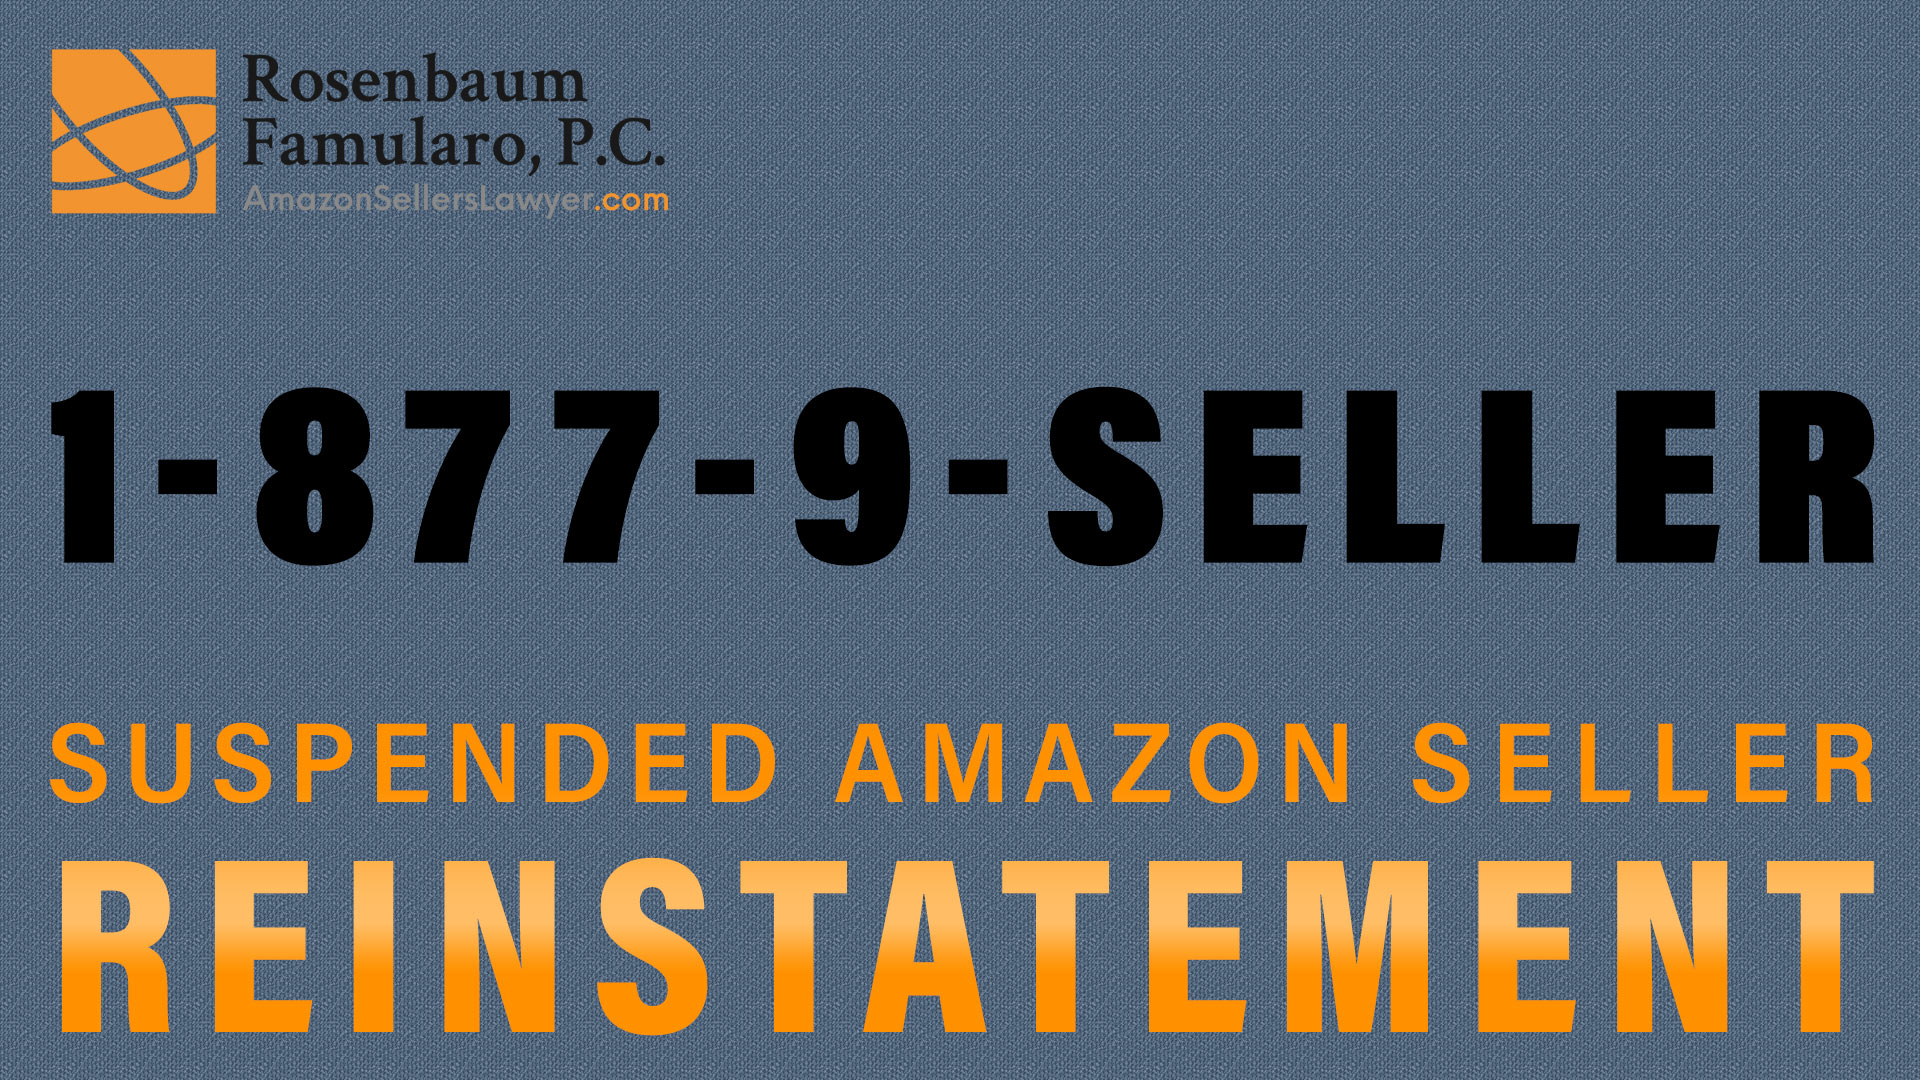 suspended Amazon seller reinstatement